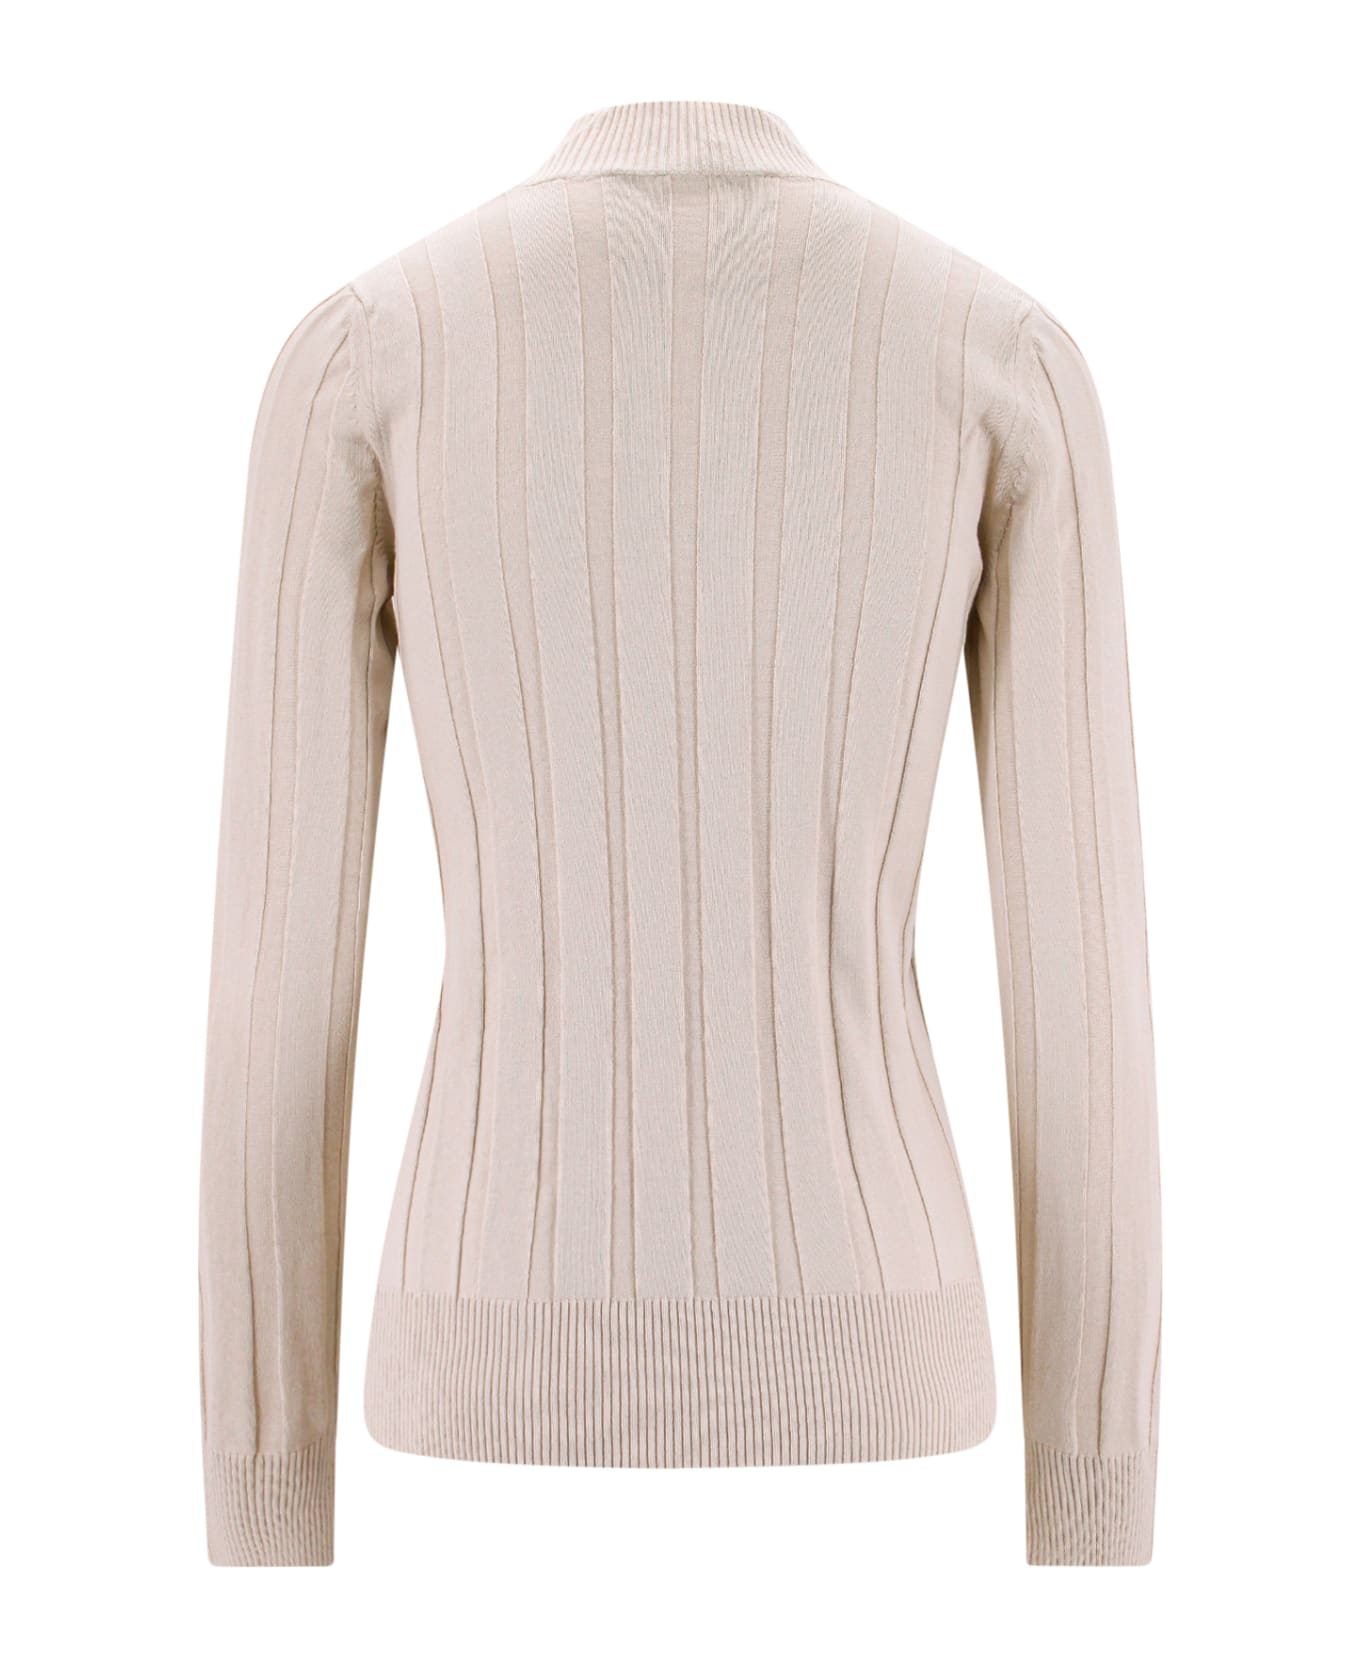 Stella McCartney Sweater - Cream ニットウェア